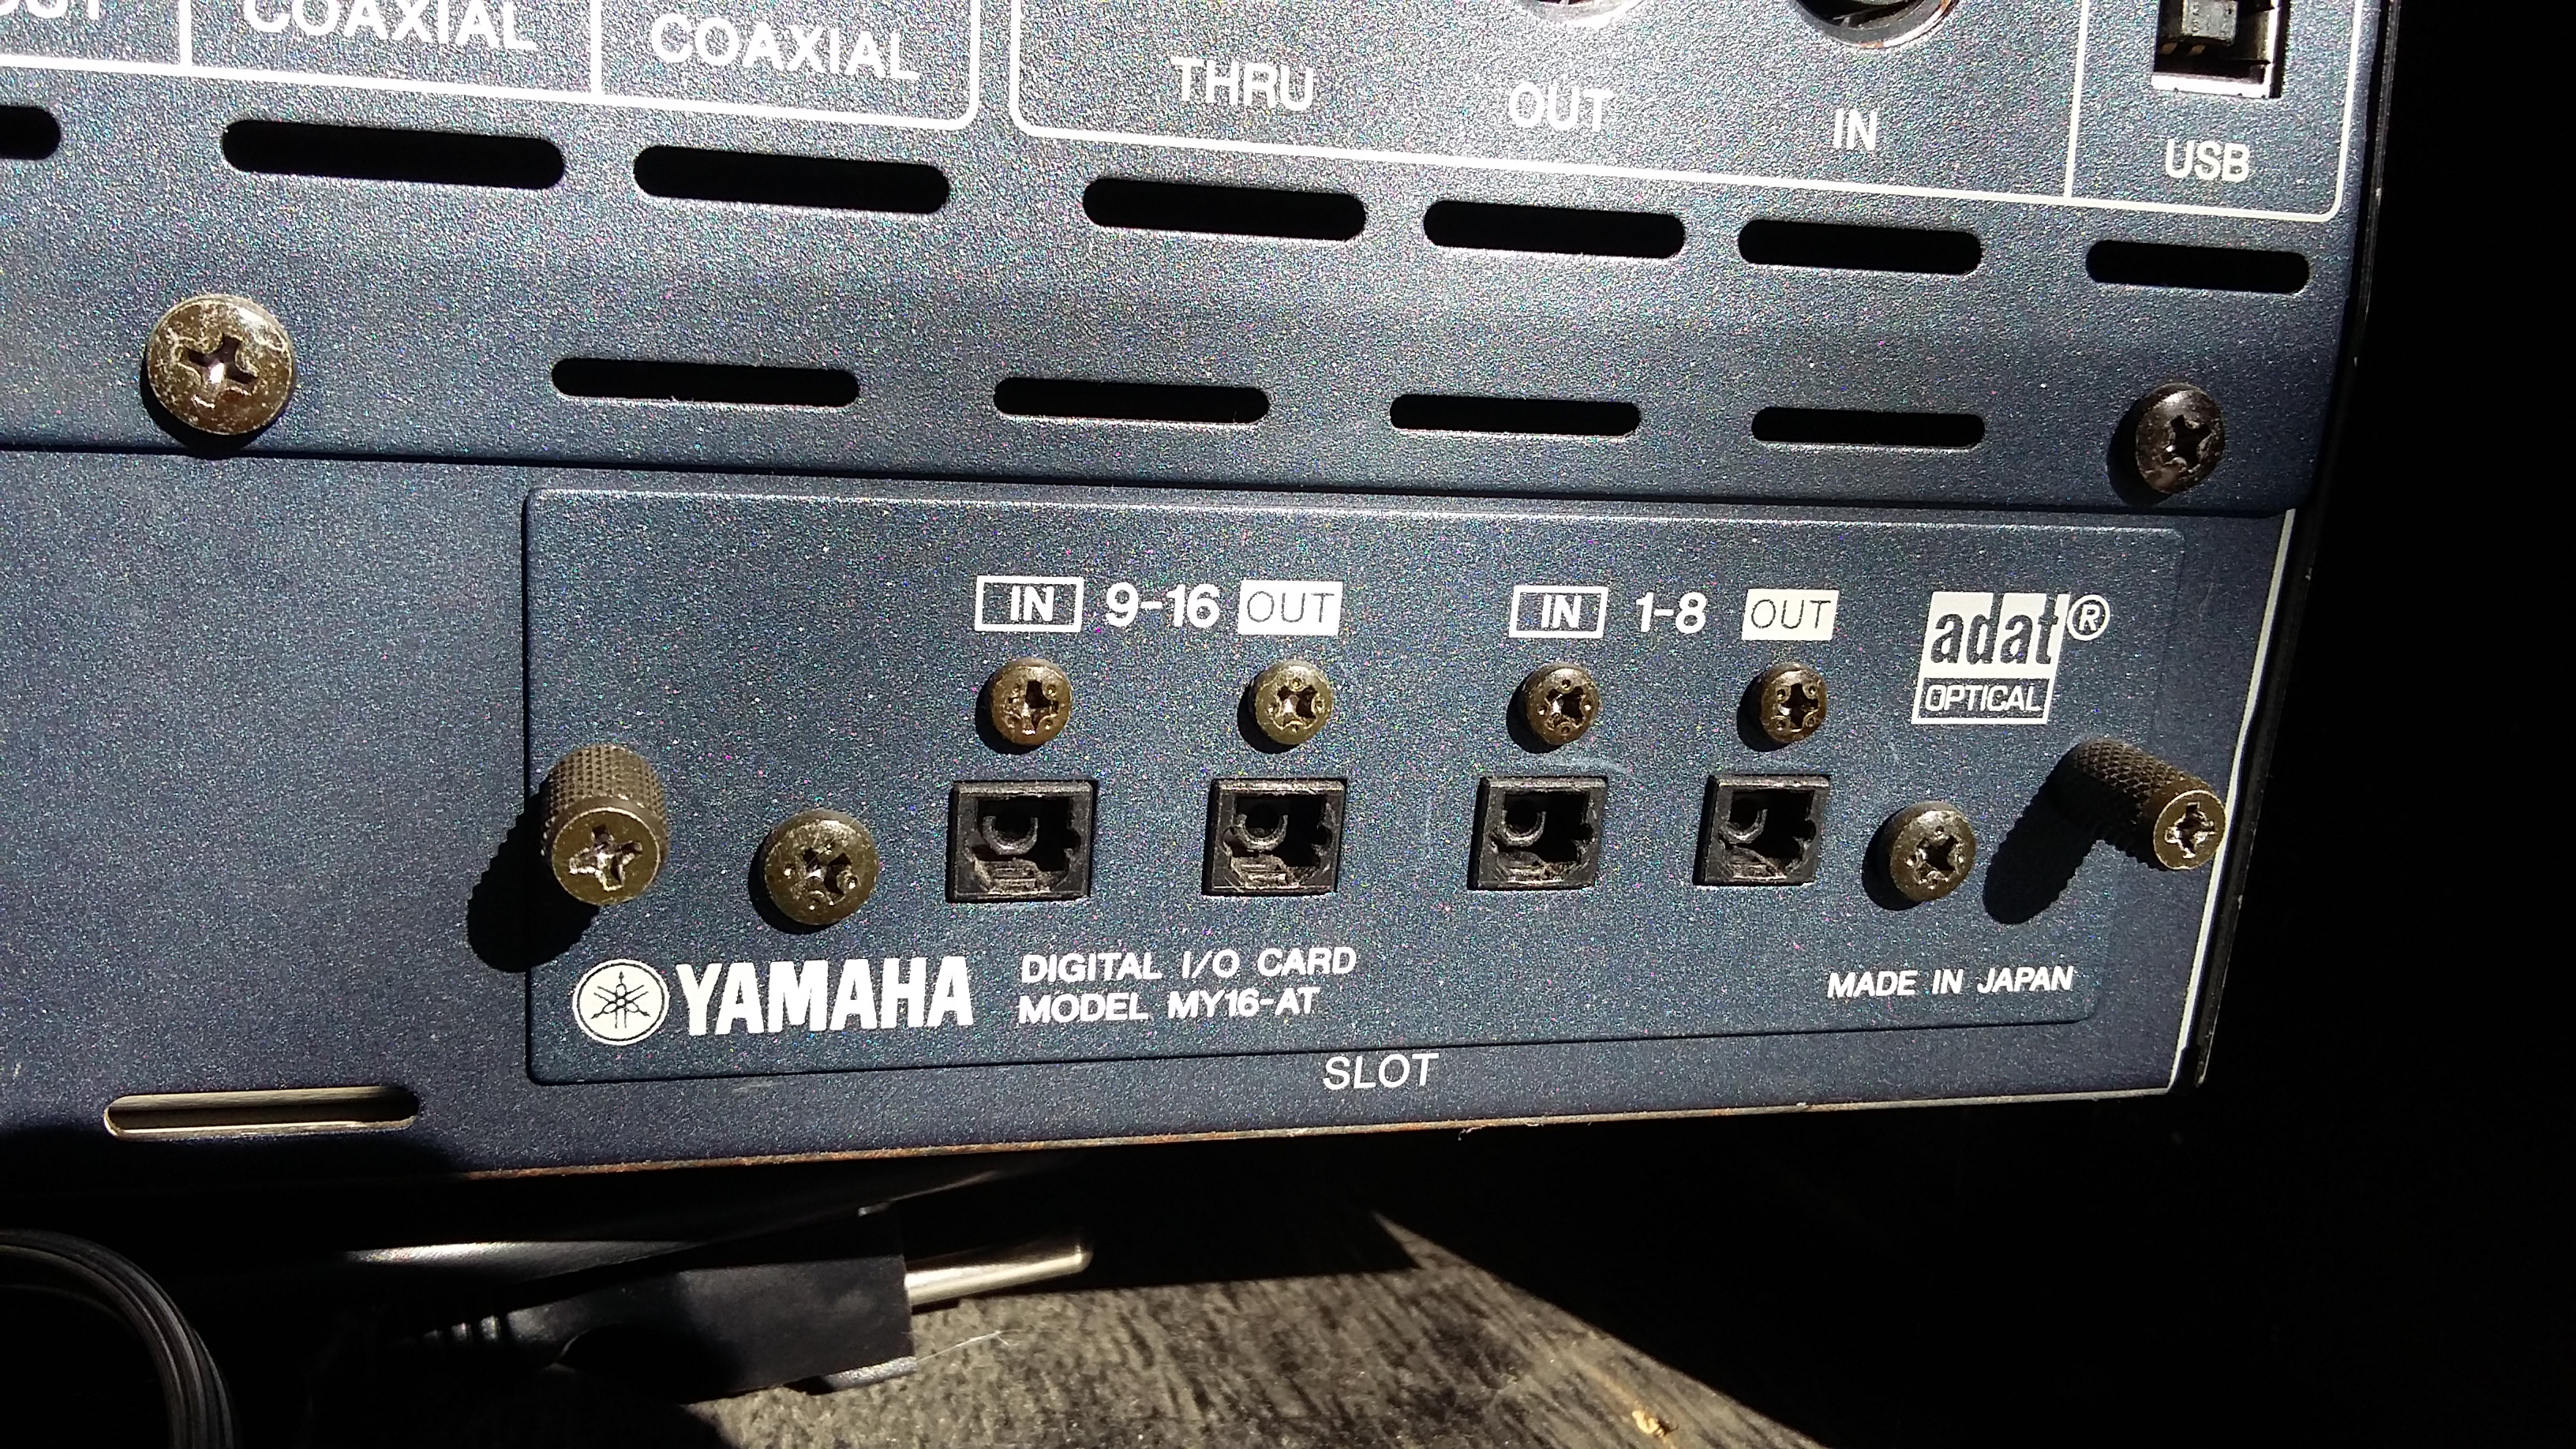 Yamaha mw12cx usb audio driver for mac